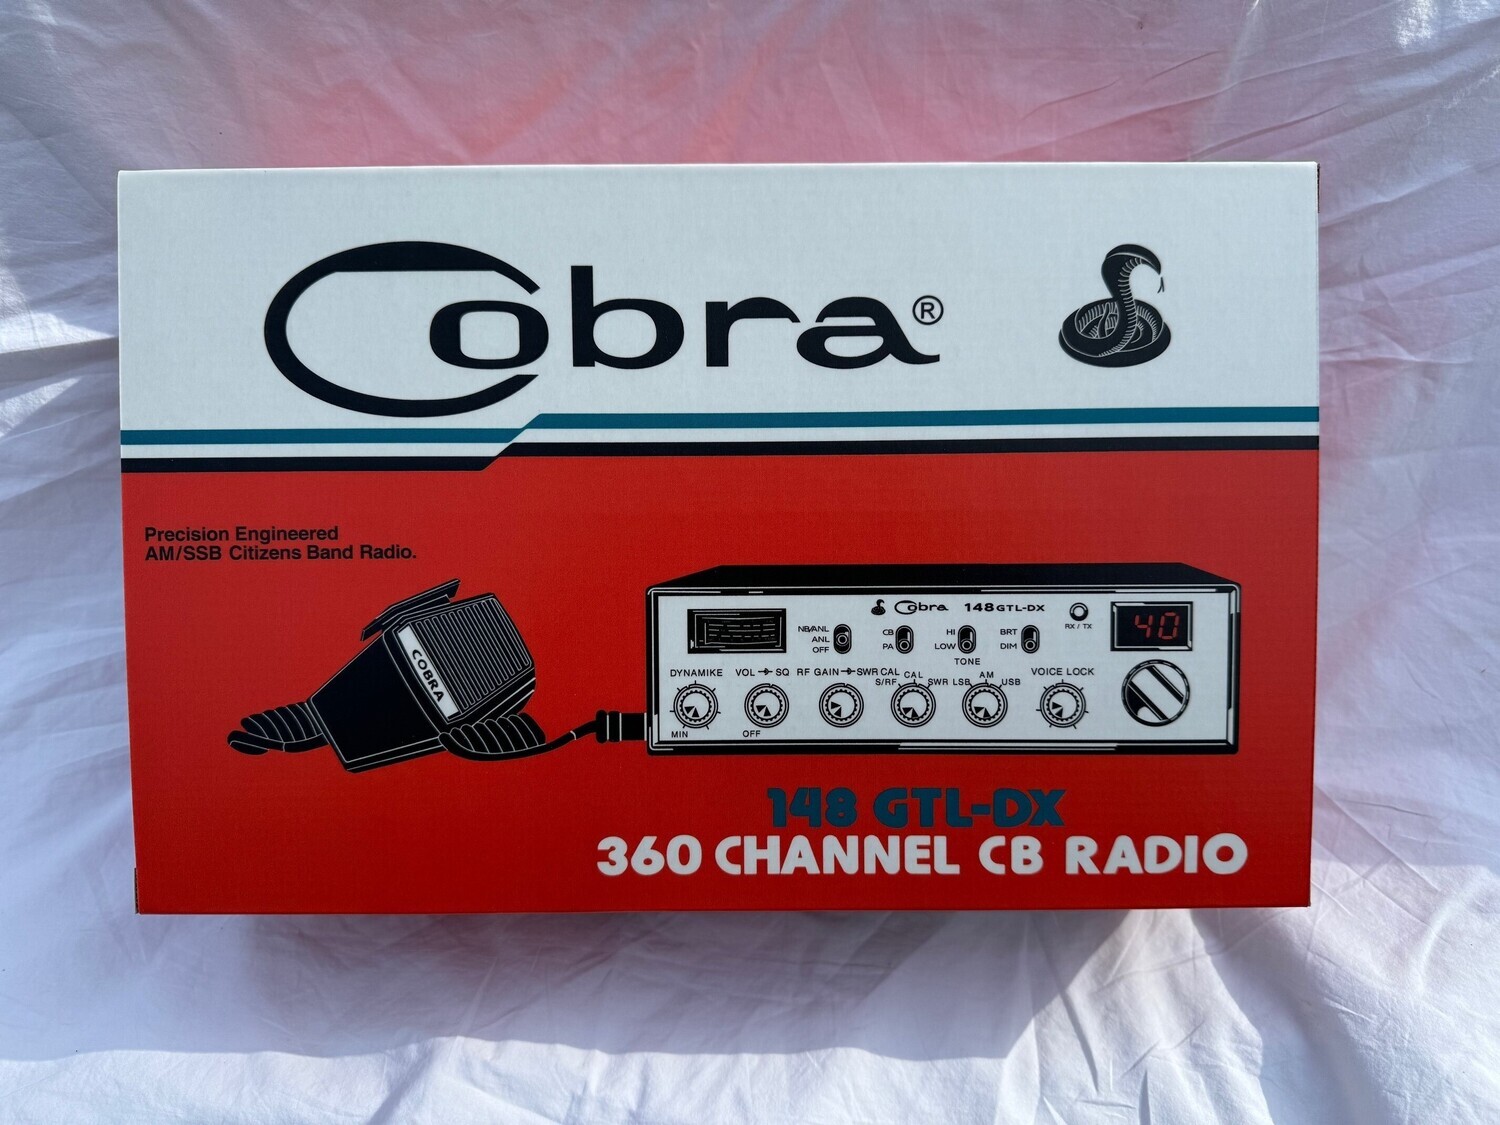 Cobra 148GTL-DX CB Radio/Freebander Empty Box - Original Version